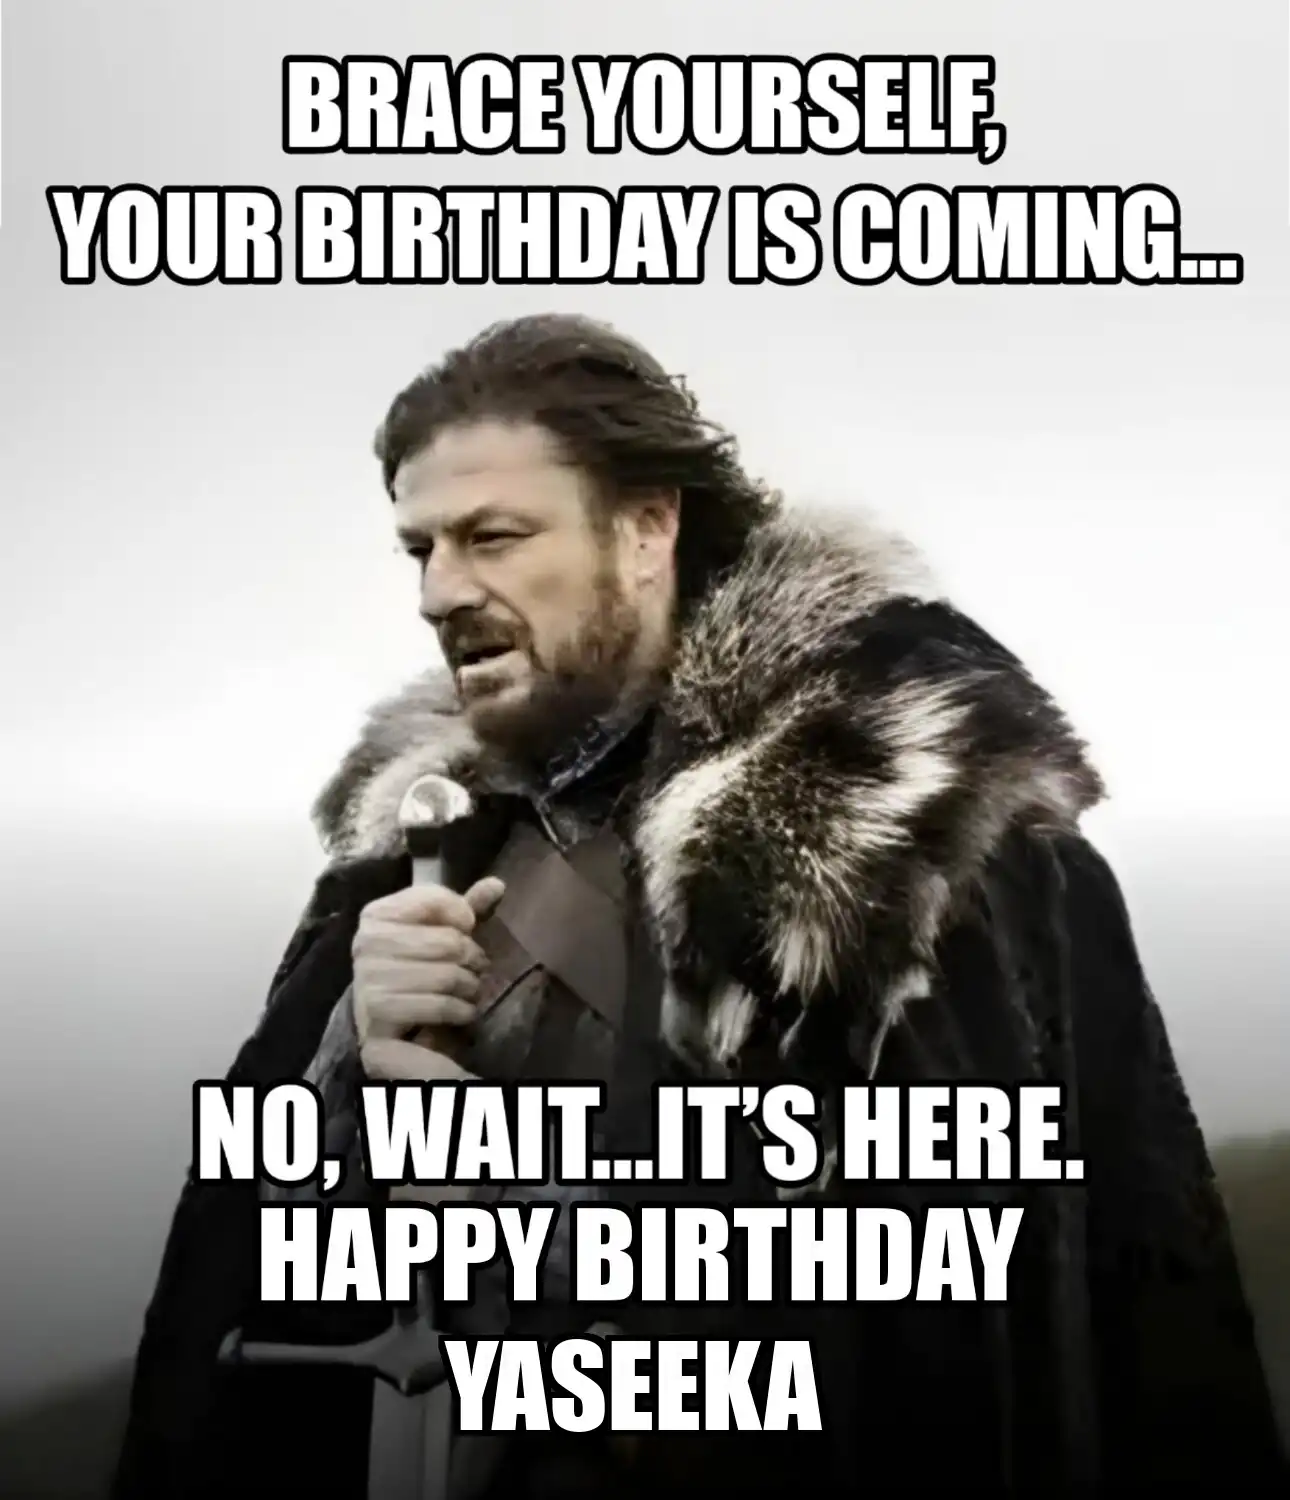 Happy Birthday Yaseeka Brace Yourself Your Birthday Is Coming Meme